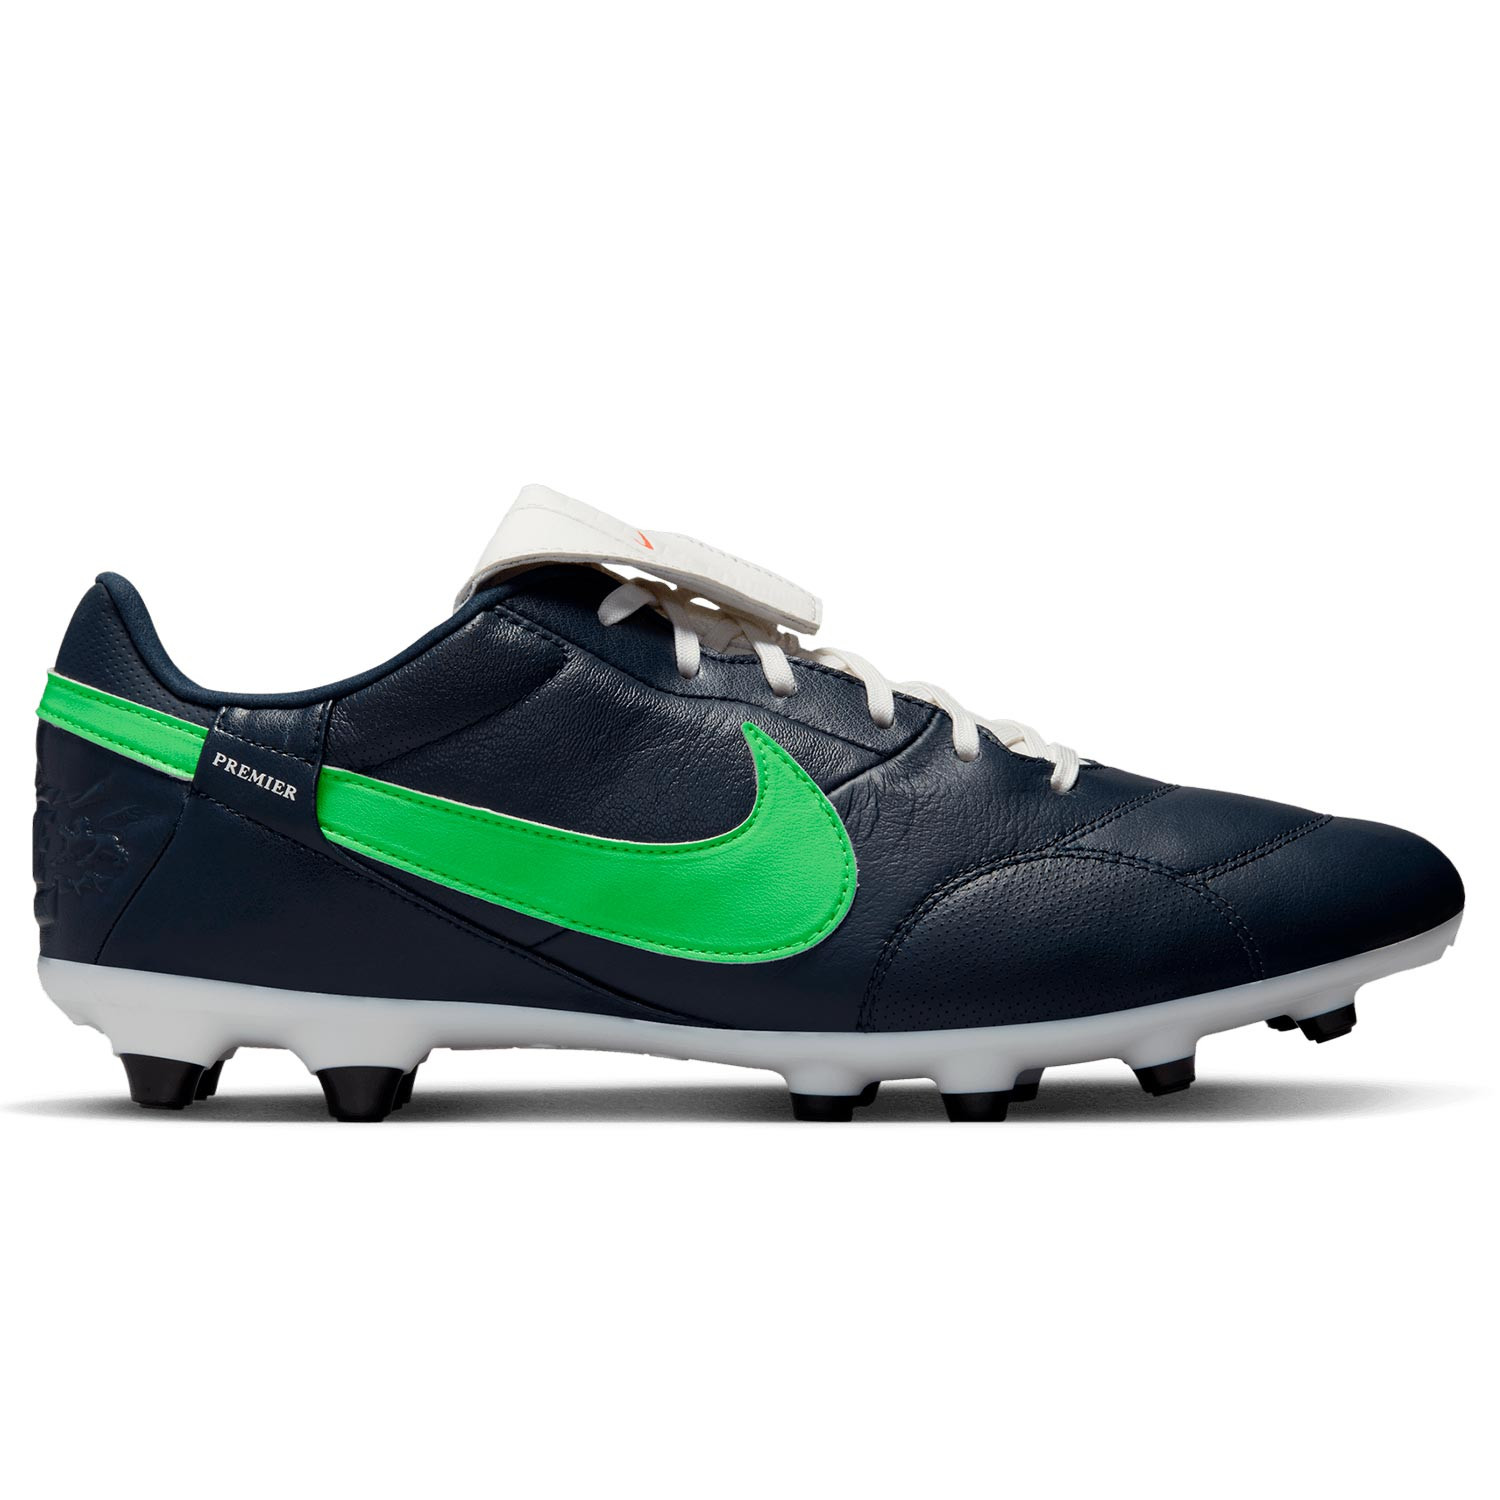 Botas fútbol Nike Premier 3 azul marino verde futbolmania